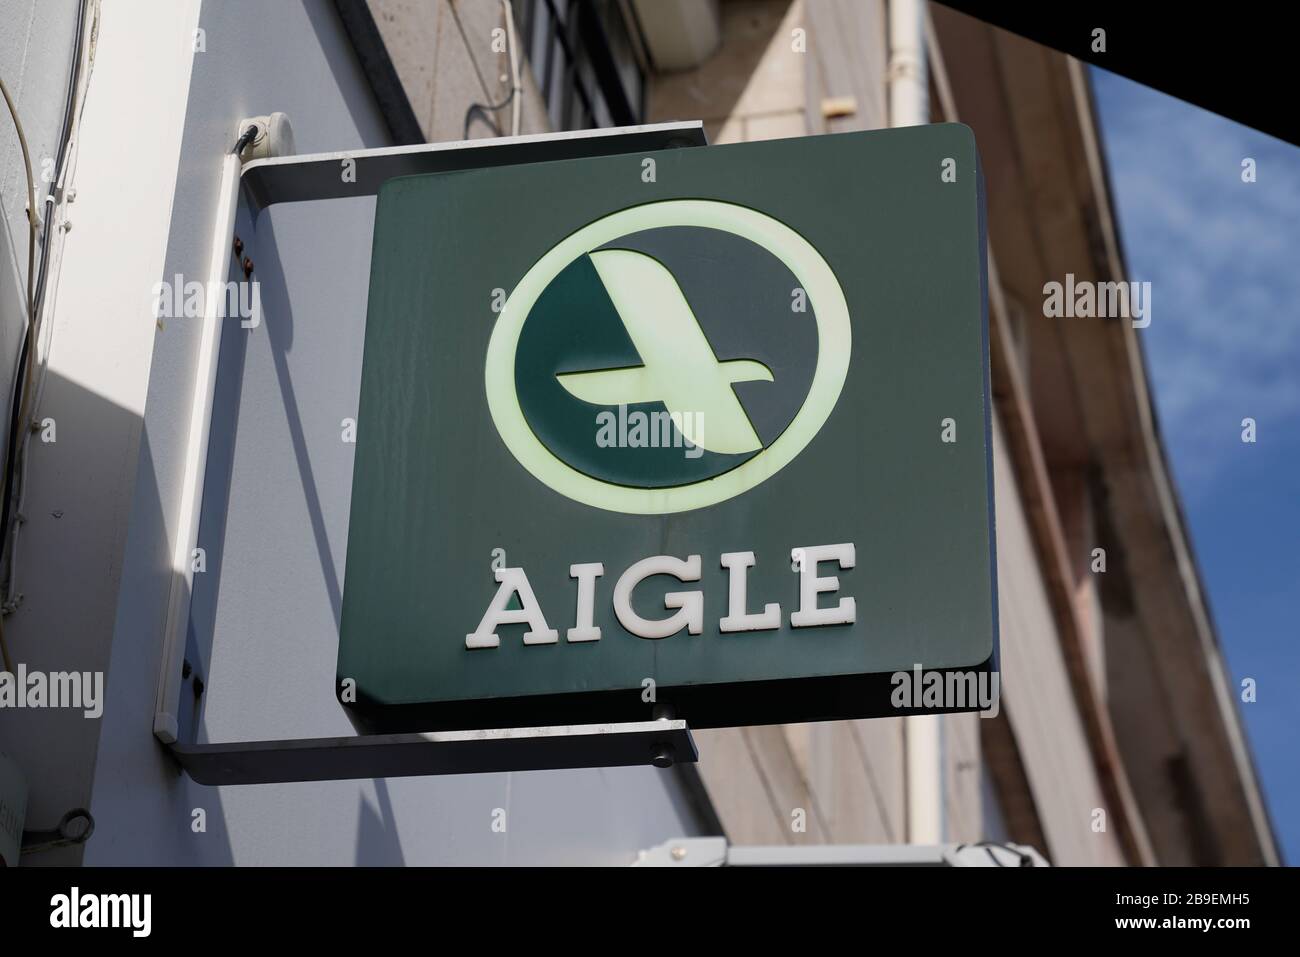 Bordeaux , Aquitaine / France - 02 15 2020 : aigle sign store logo BOOTS SHOES AND CLOTHING logo shop signage Stock Photo